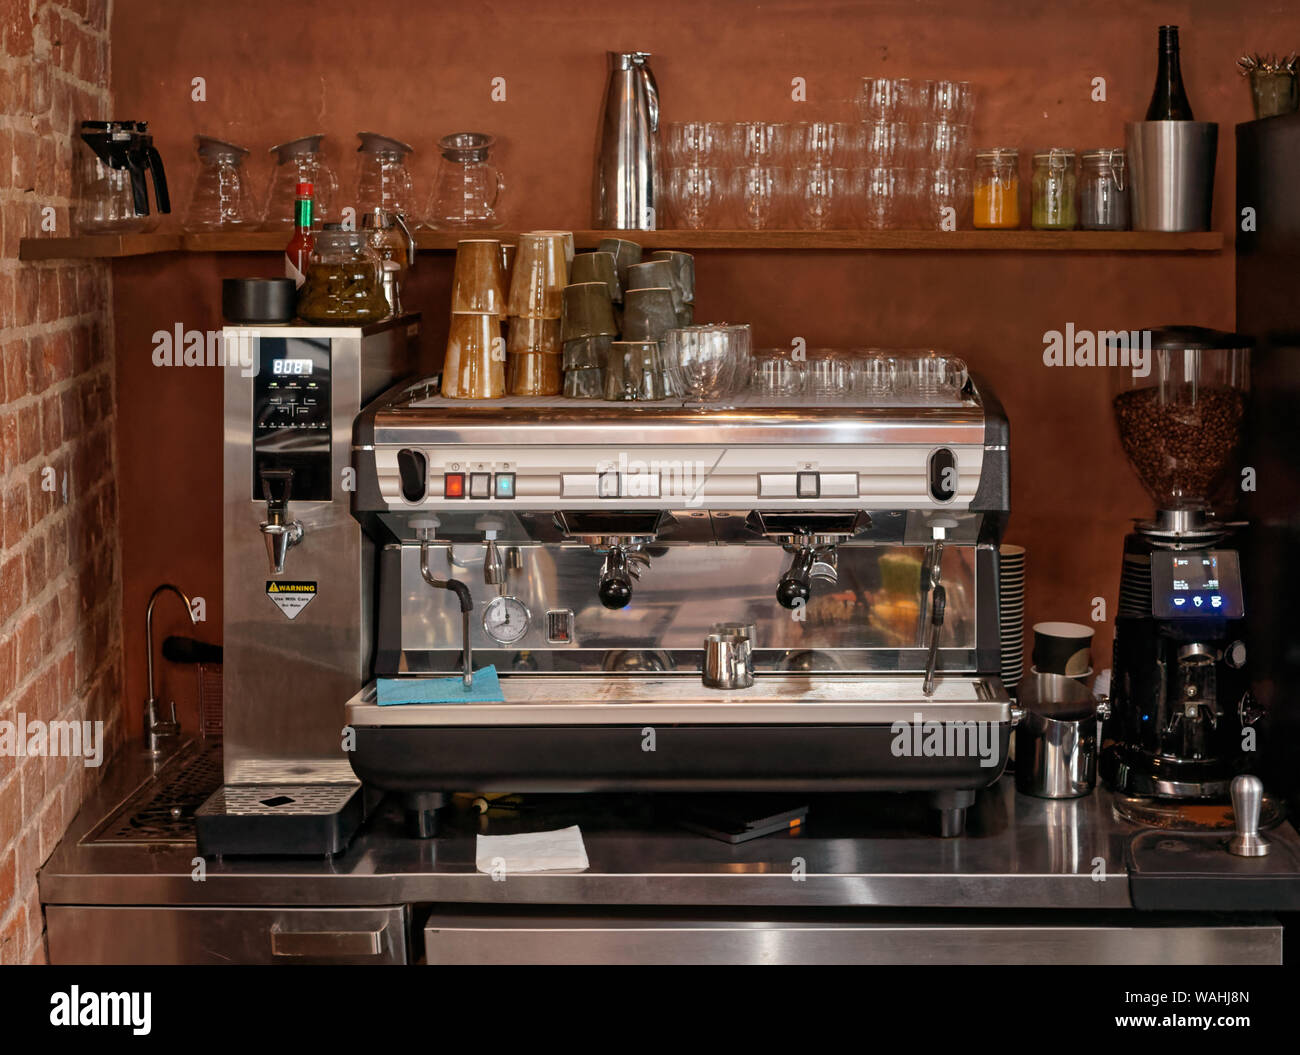 https://c8.alamy.com/comp/WAHJ8N/espresso-machine-hot-water-dispenser-and-coffee-grinder-in-a-bar-WAHJ8N.jpg